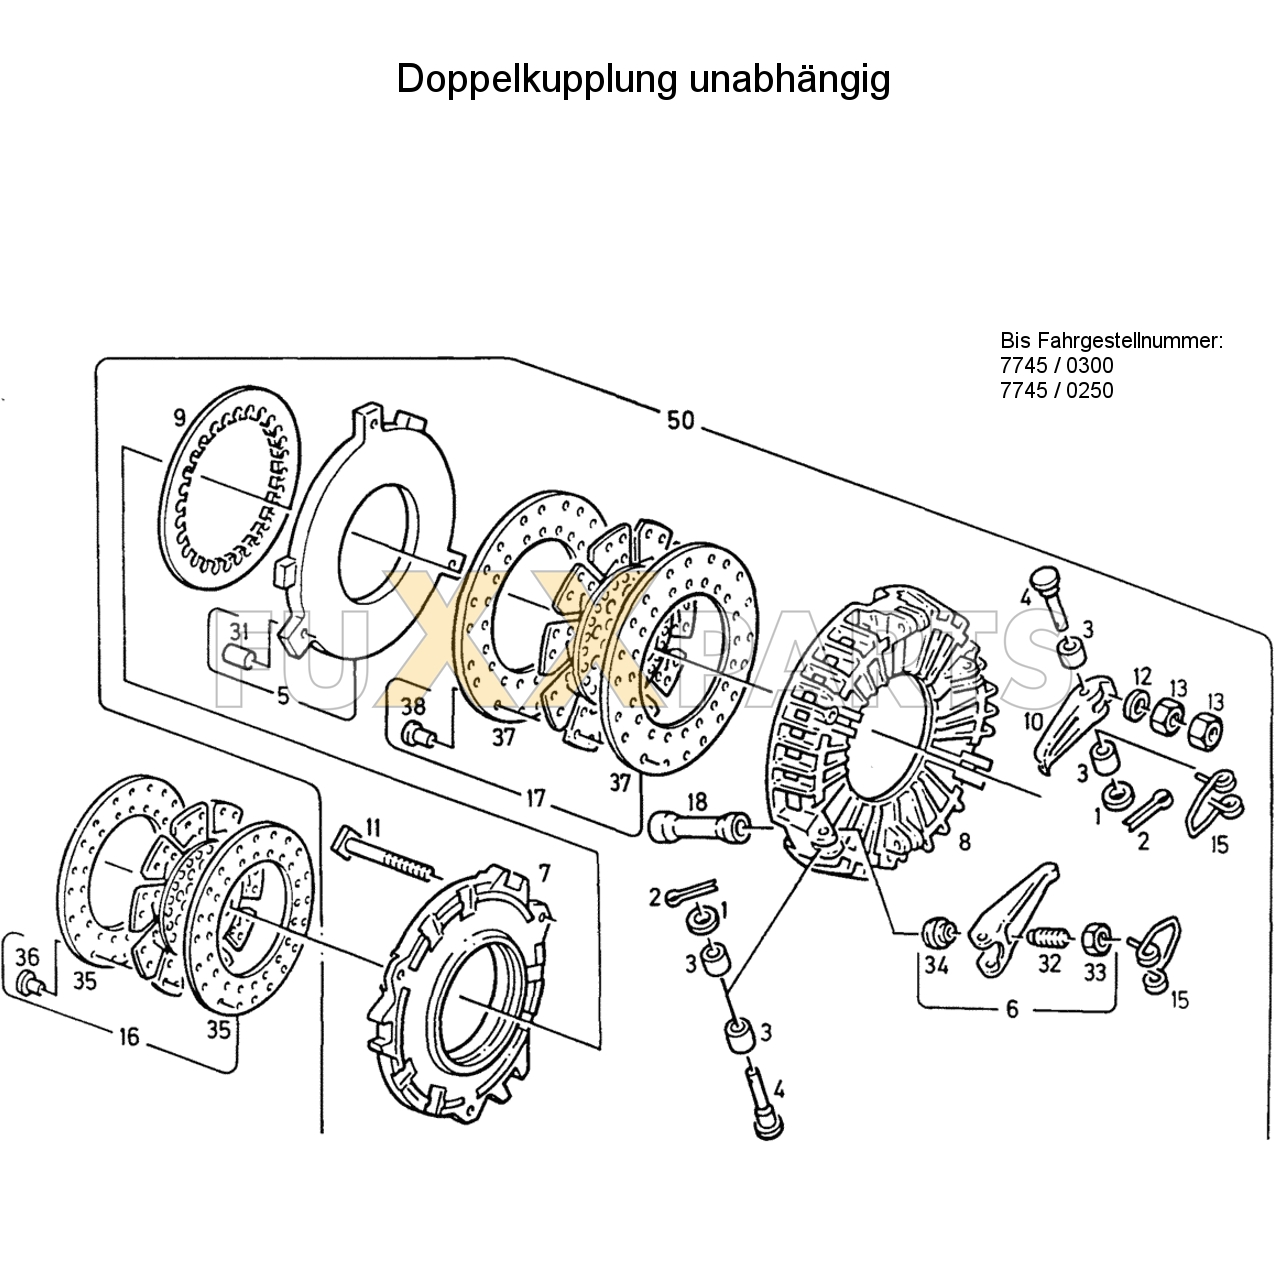 D 6807 C Doppelkupplung unabhängig 1